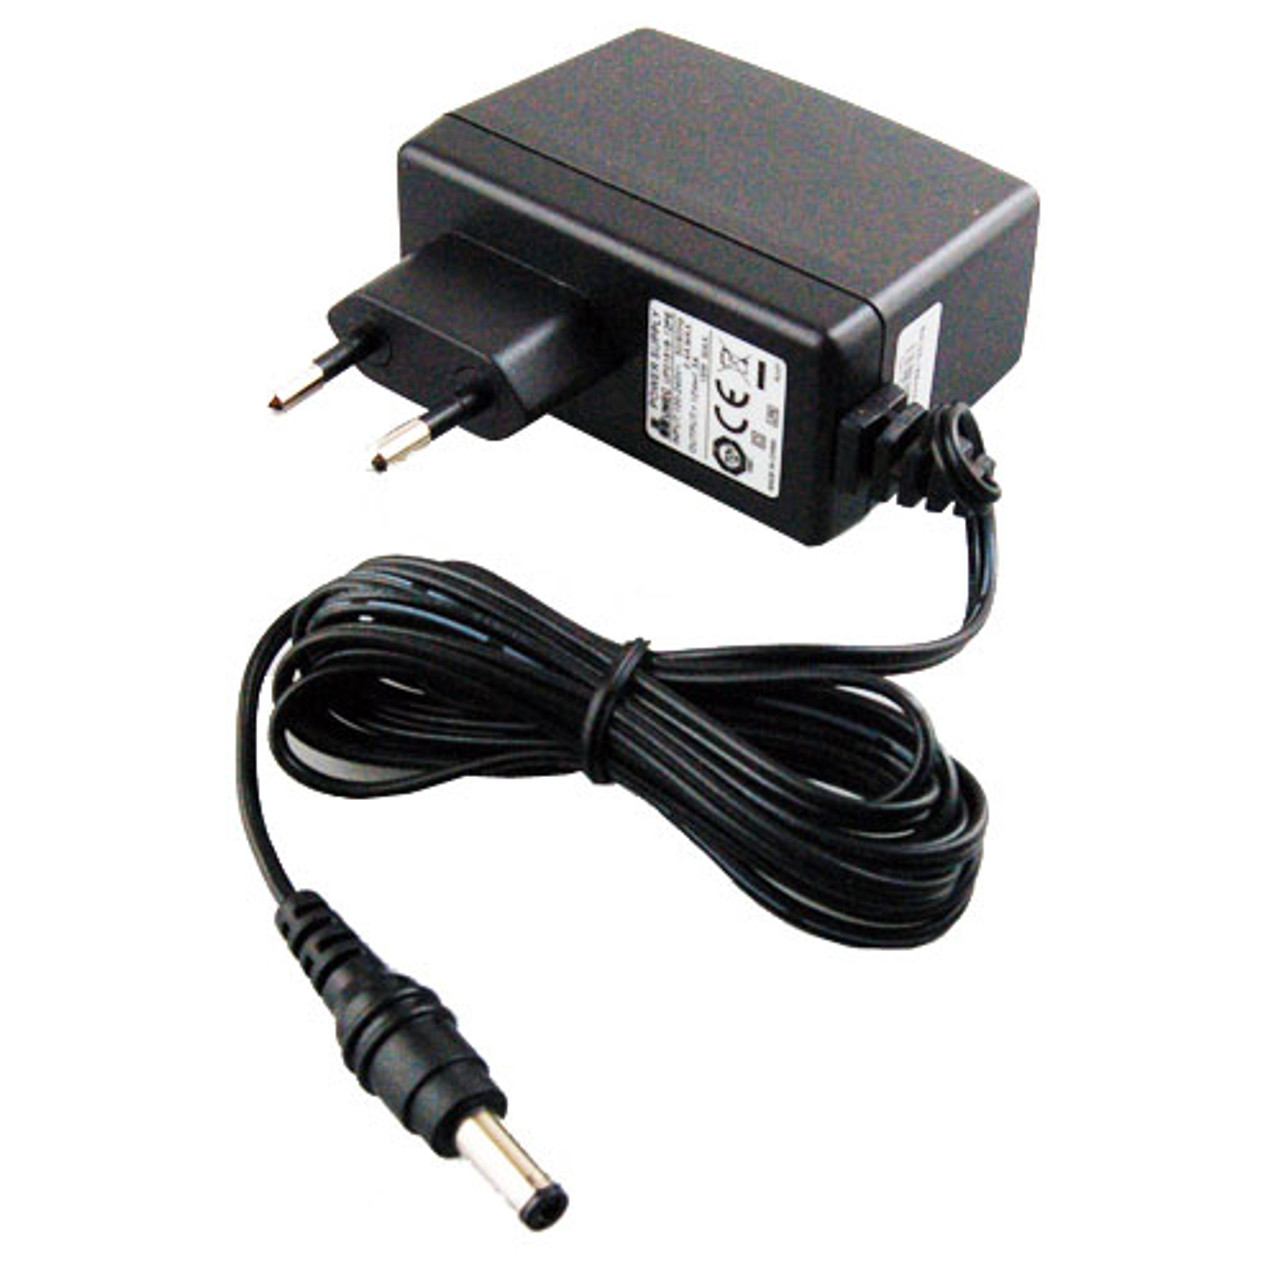 ACEU-12V - AC 90-240V input power adapter for FRM220, FIB1 and FMC